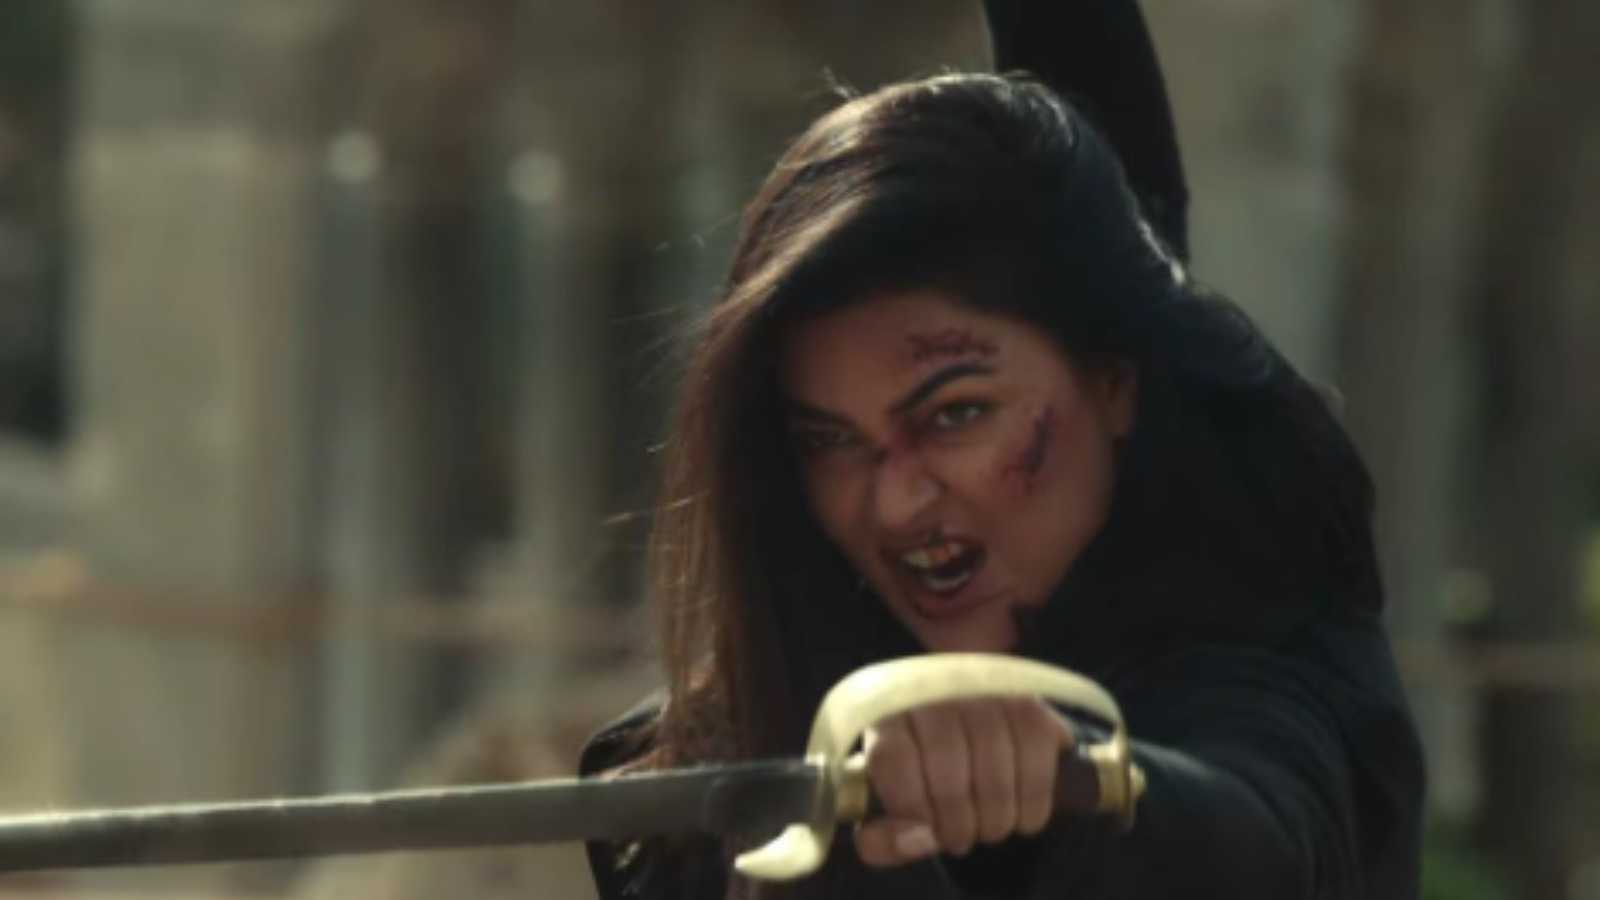 Aarya 3 on OTT: When and where to watch the Sushmita Sen starrer crime thriller series